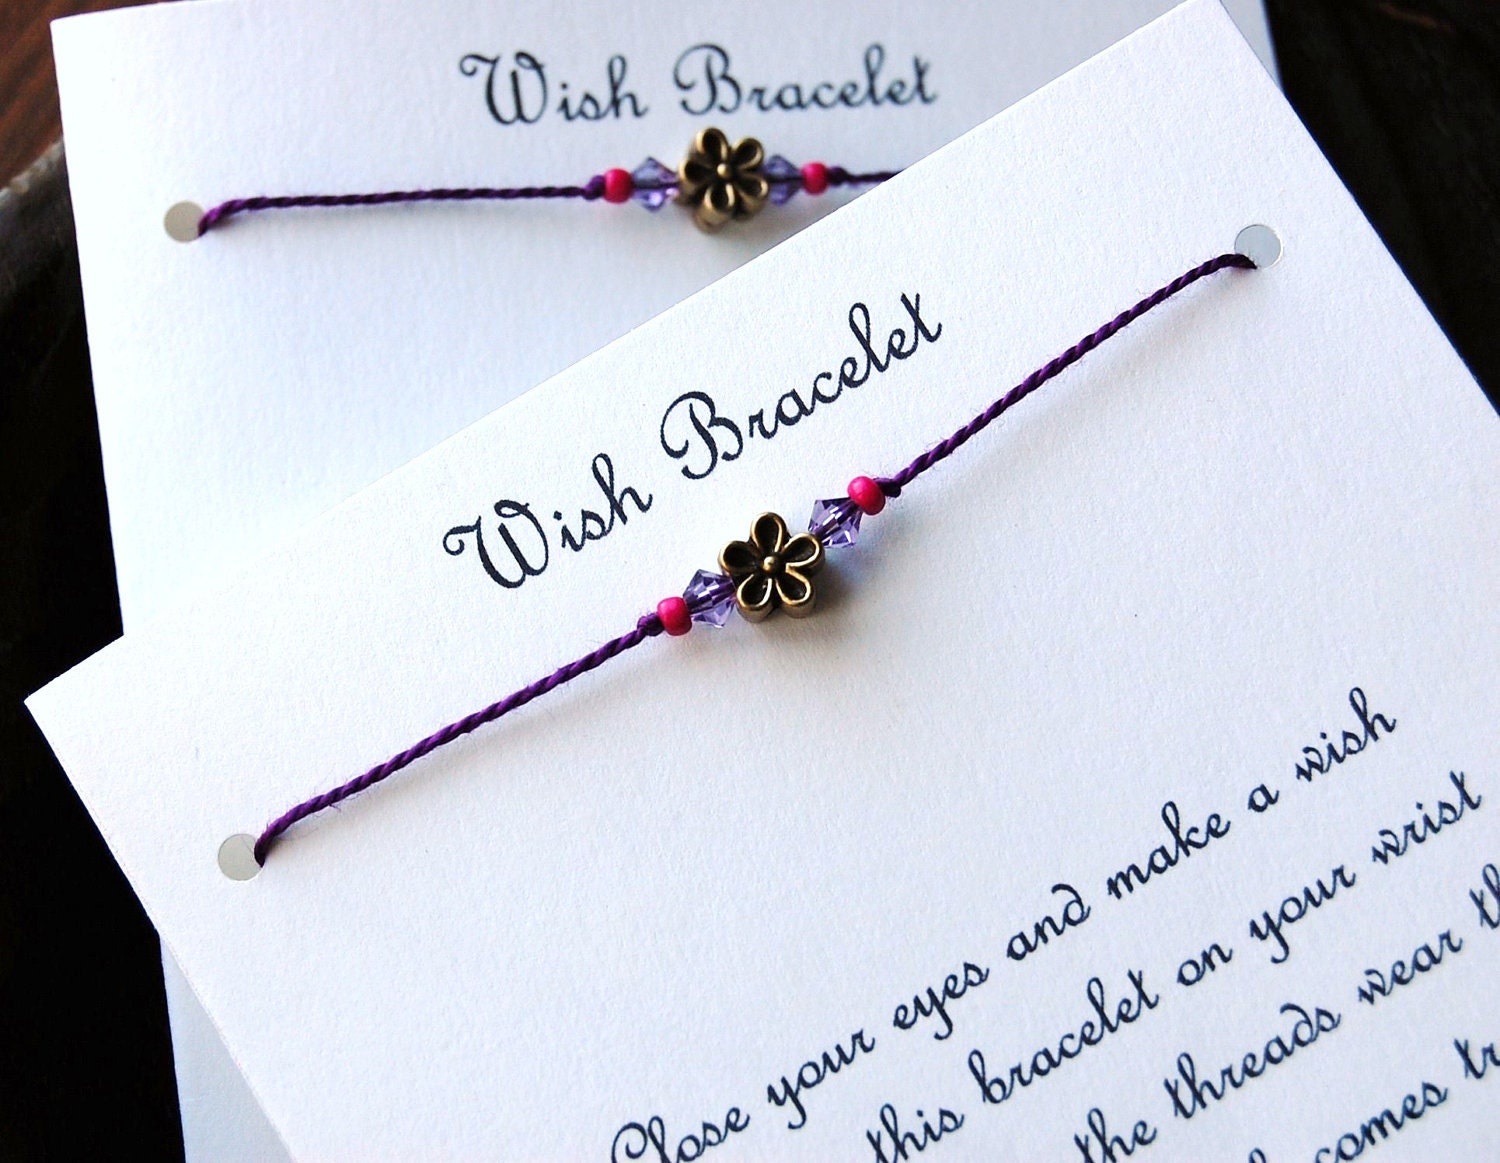  Bracelets on Fitzgerald Cancer Fund Wish Bracelet By Plunkettdesigns On Etsy